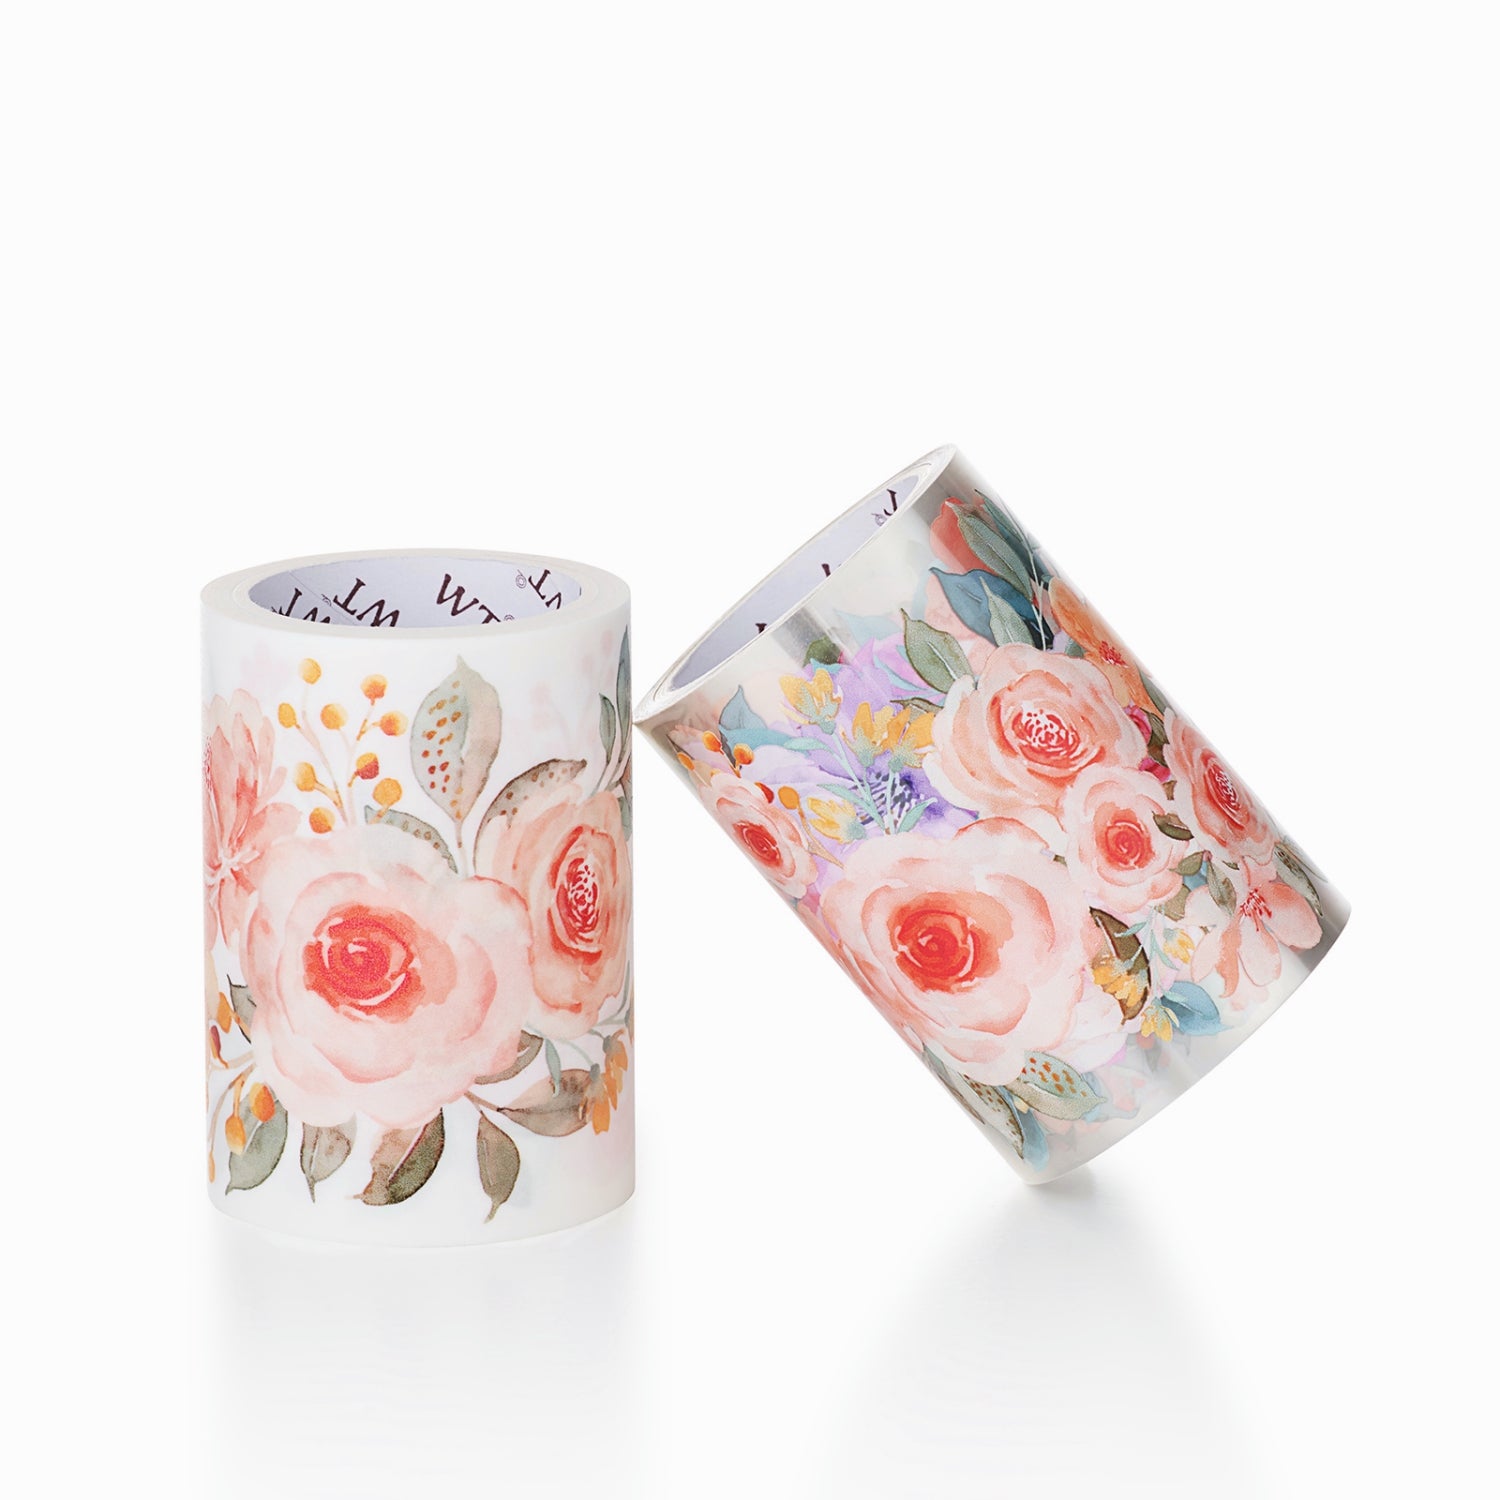 Tape - Pastoral Flower Washi Tape Set